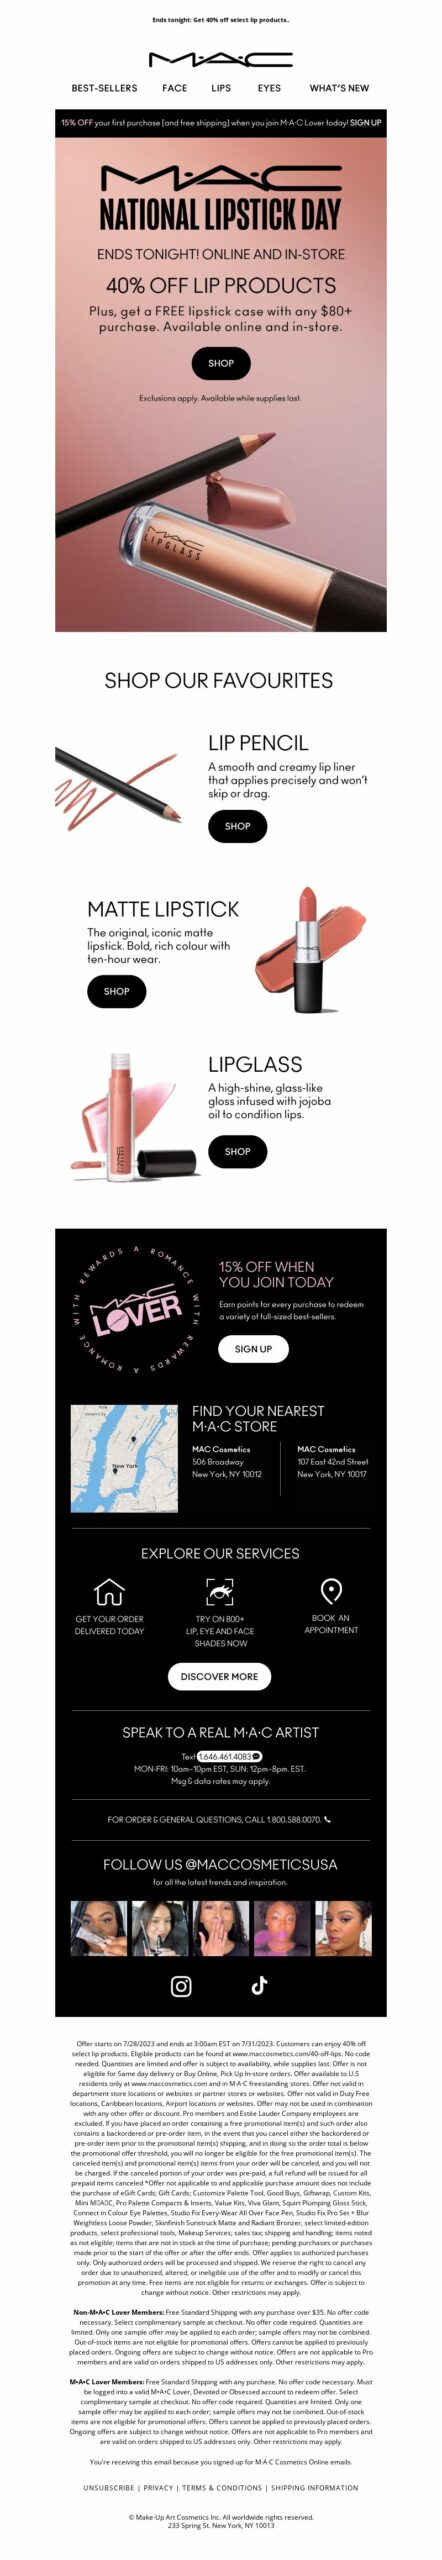 MAC Cosmetics, Lipstick Day email marketing campaign.